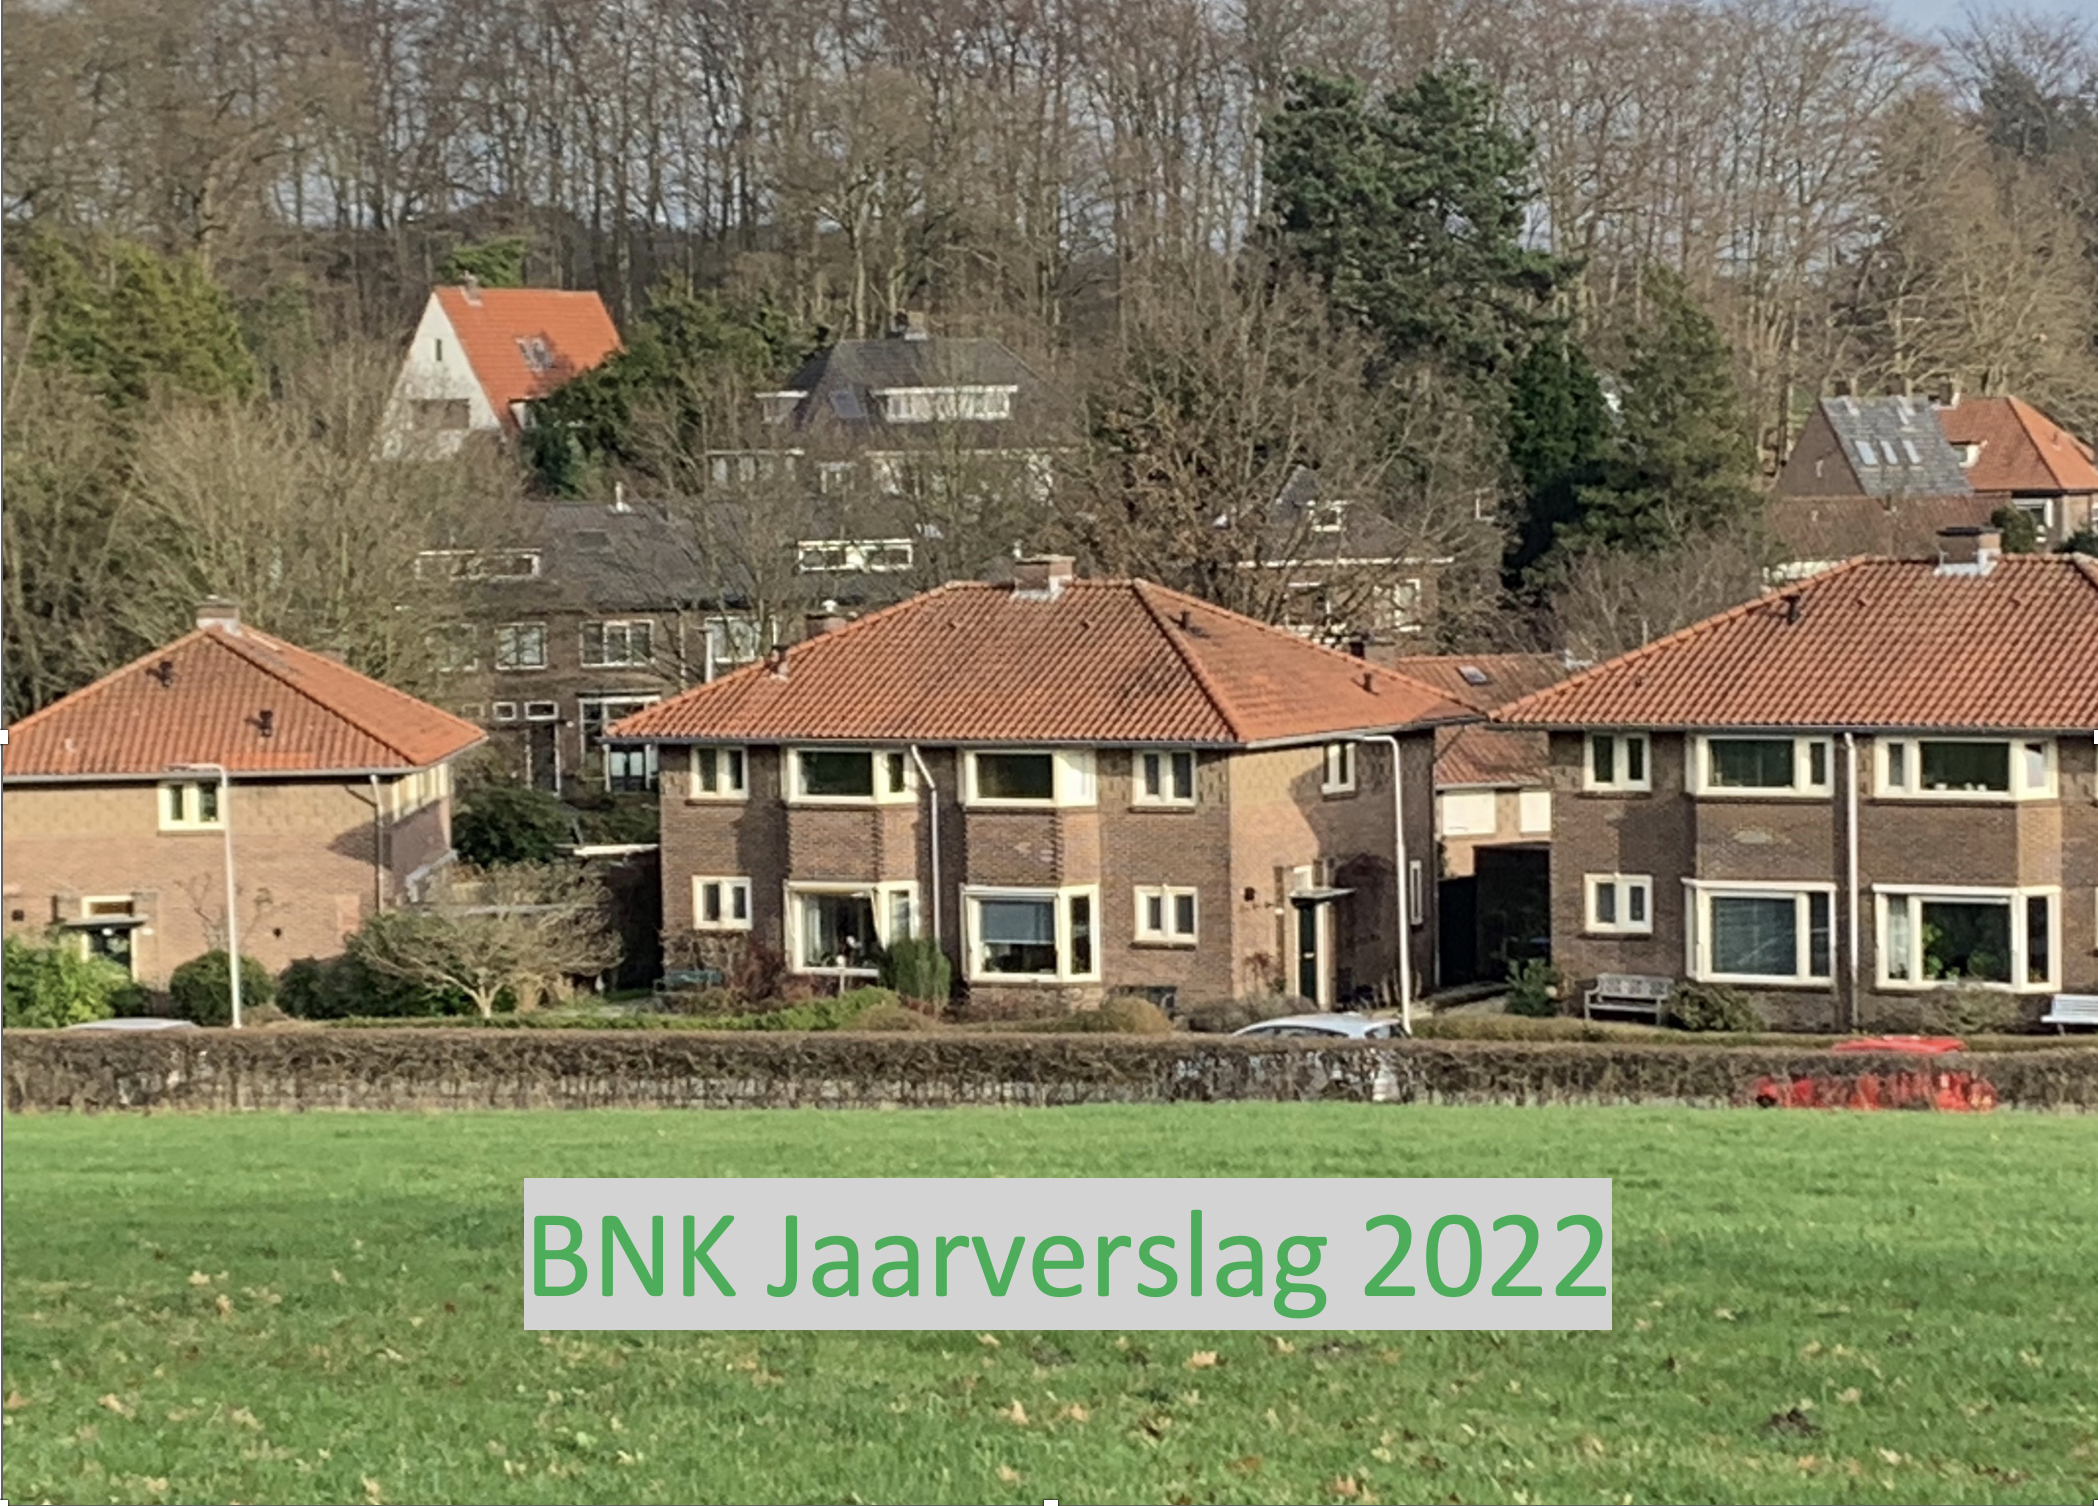 Jaarverslag 2022 BNK Arnhem vastgesteld en gepubliceerd.